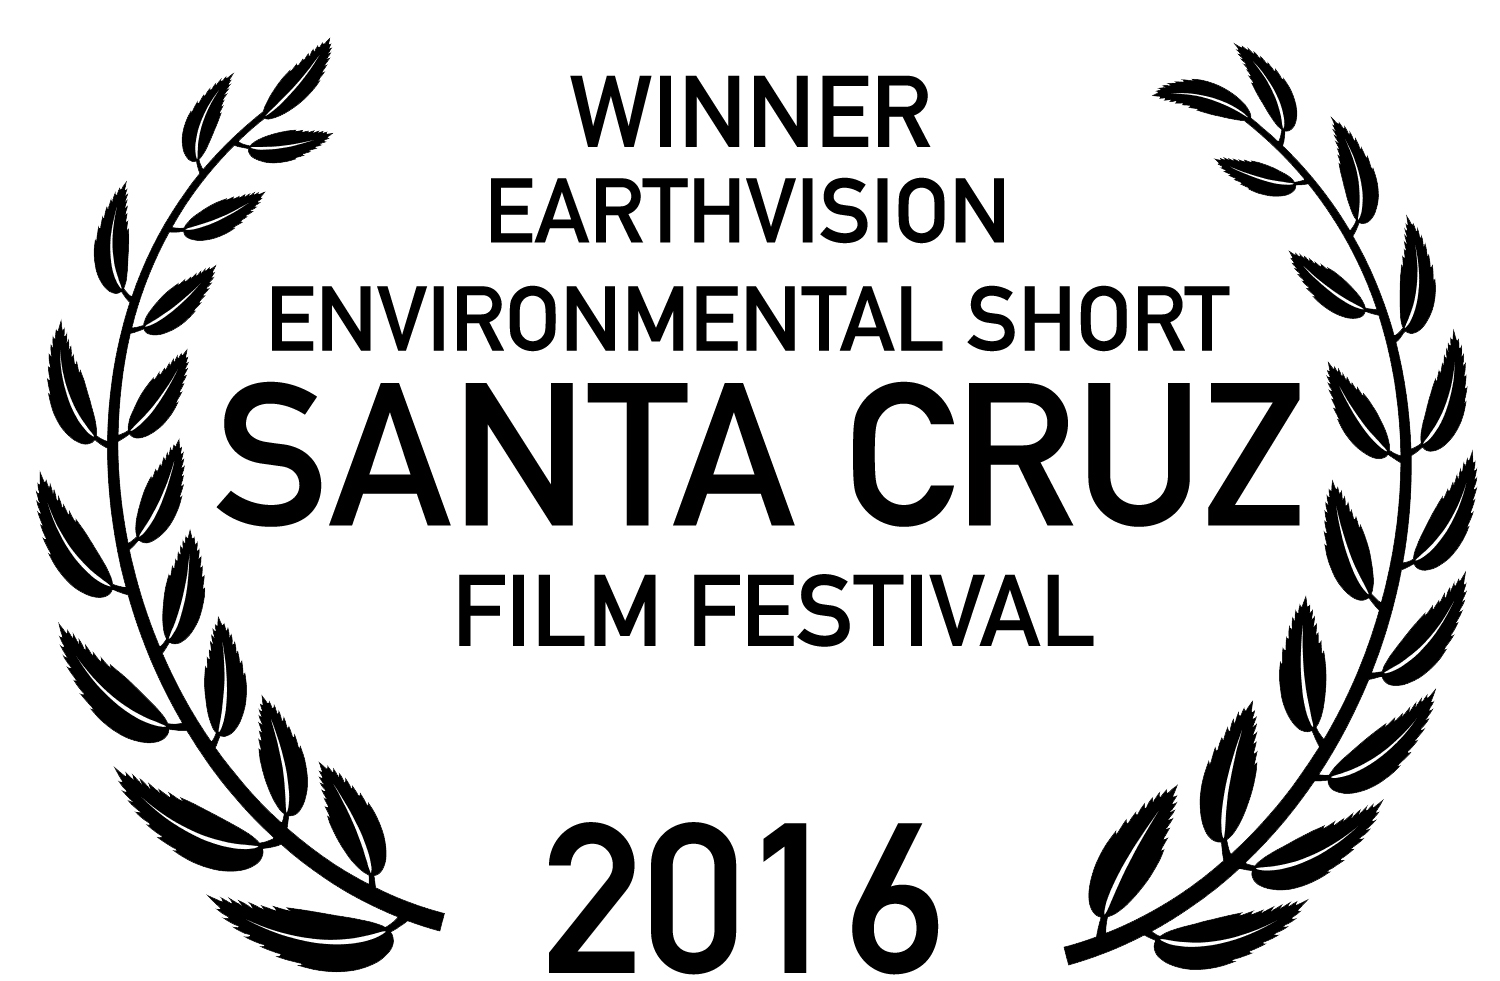 Santa Cruz Film Festival